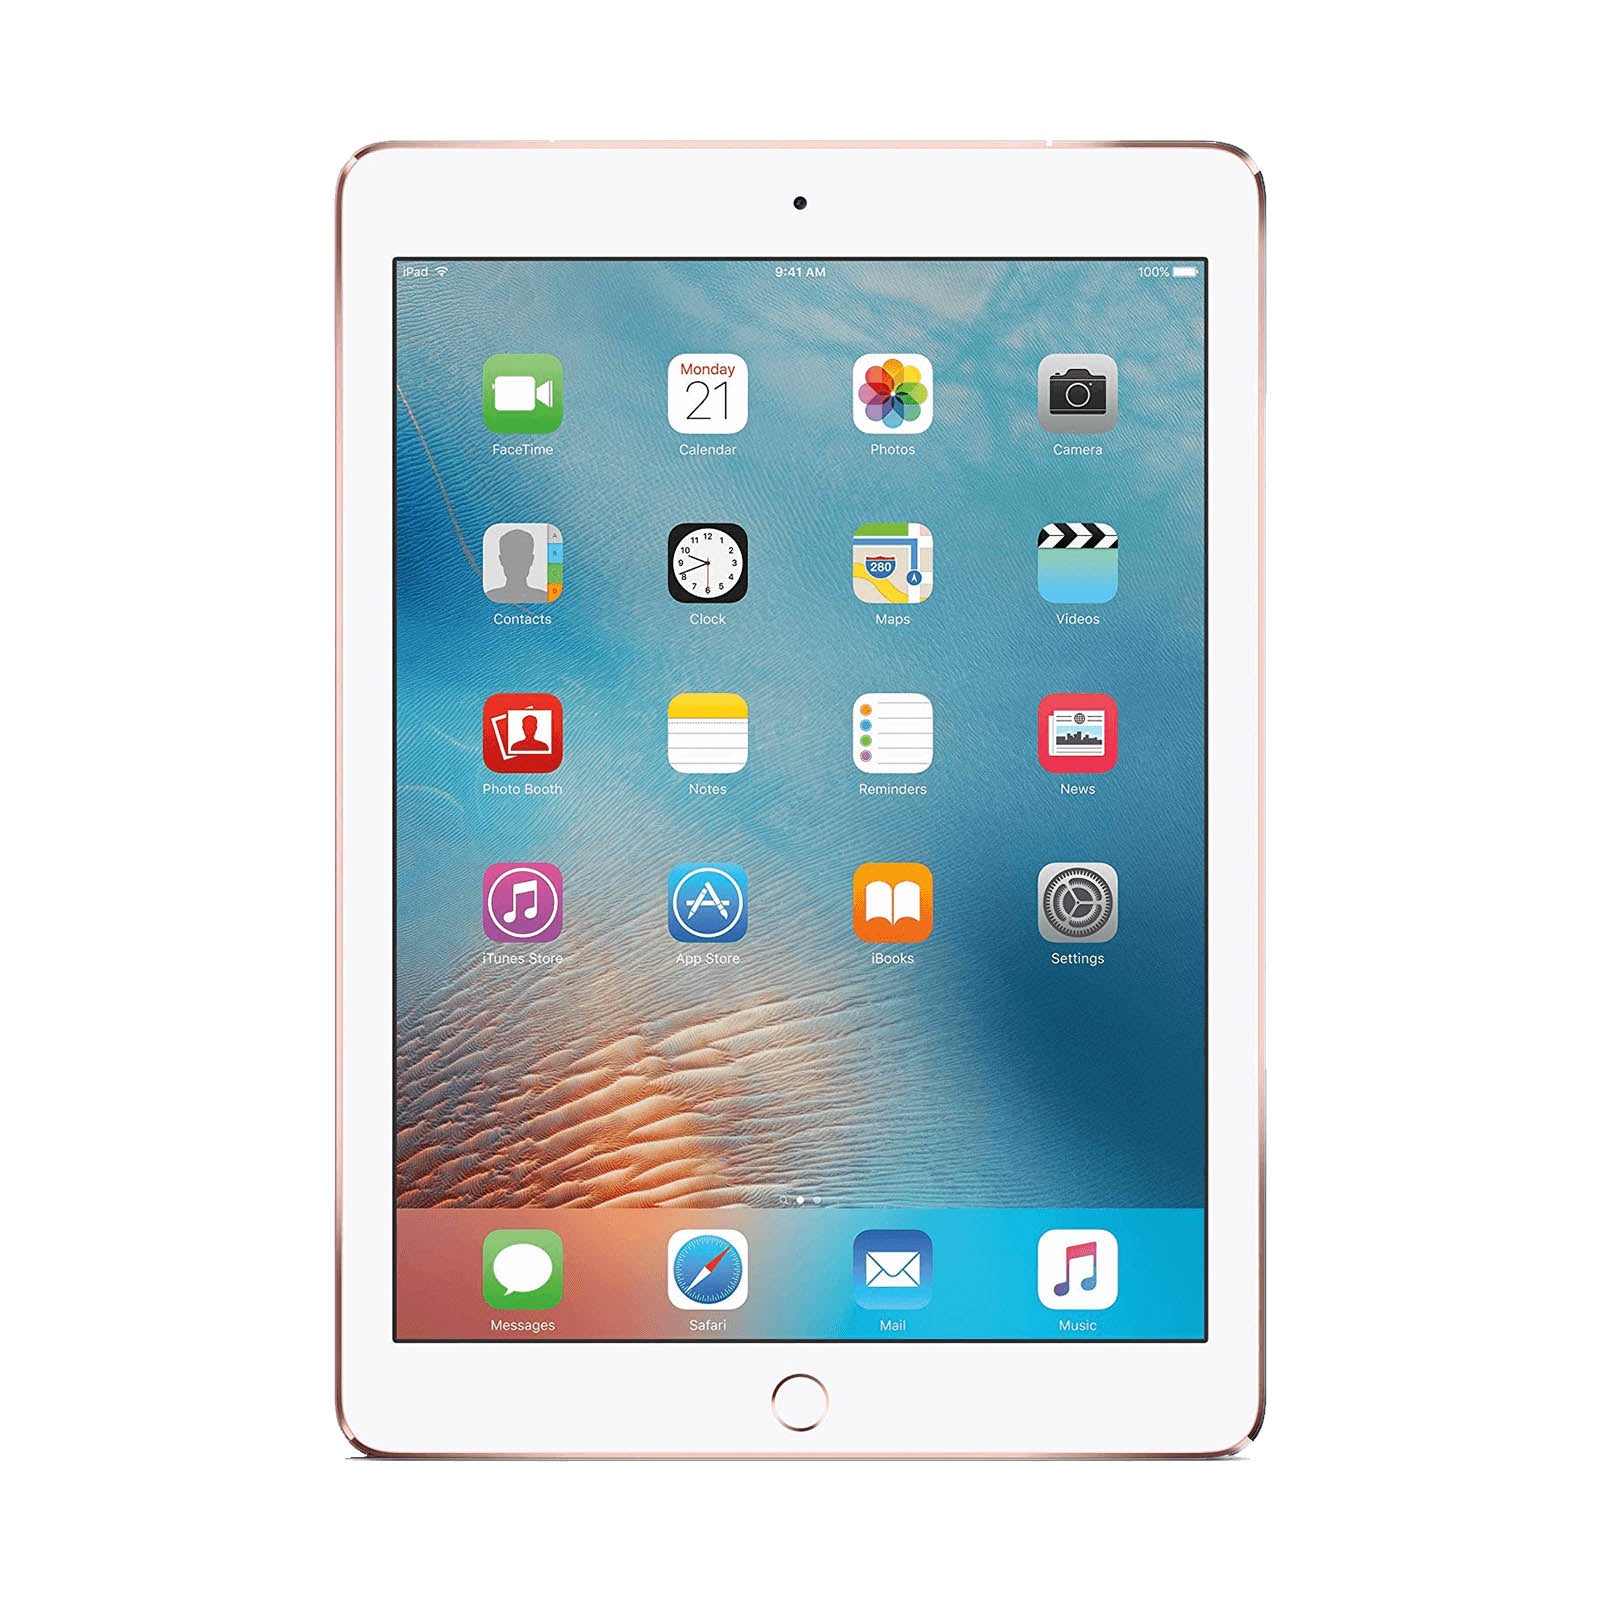 iPad Pro 9.7 Inch 128GB Rose Gold Very Good - WiFi